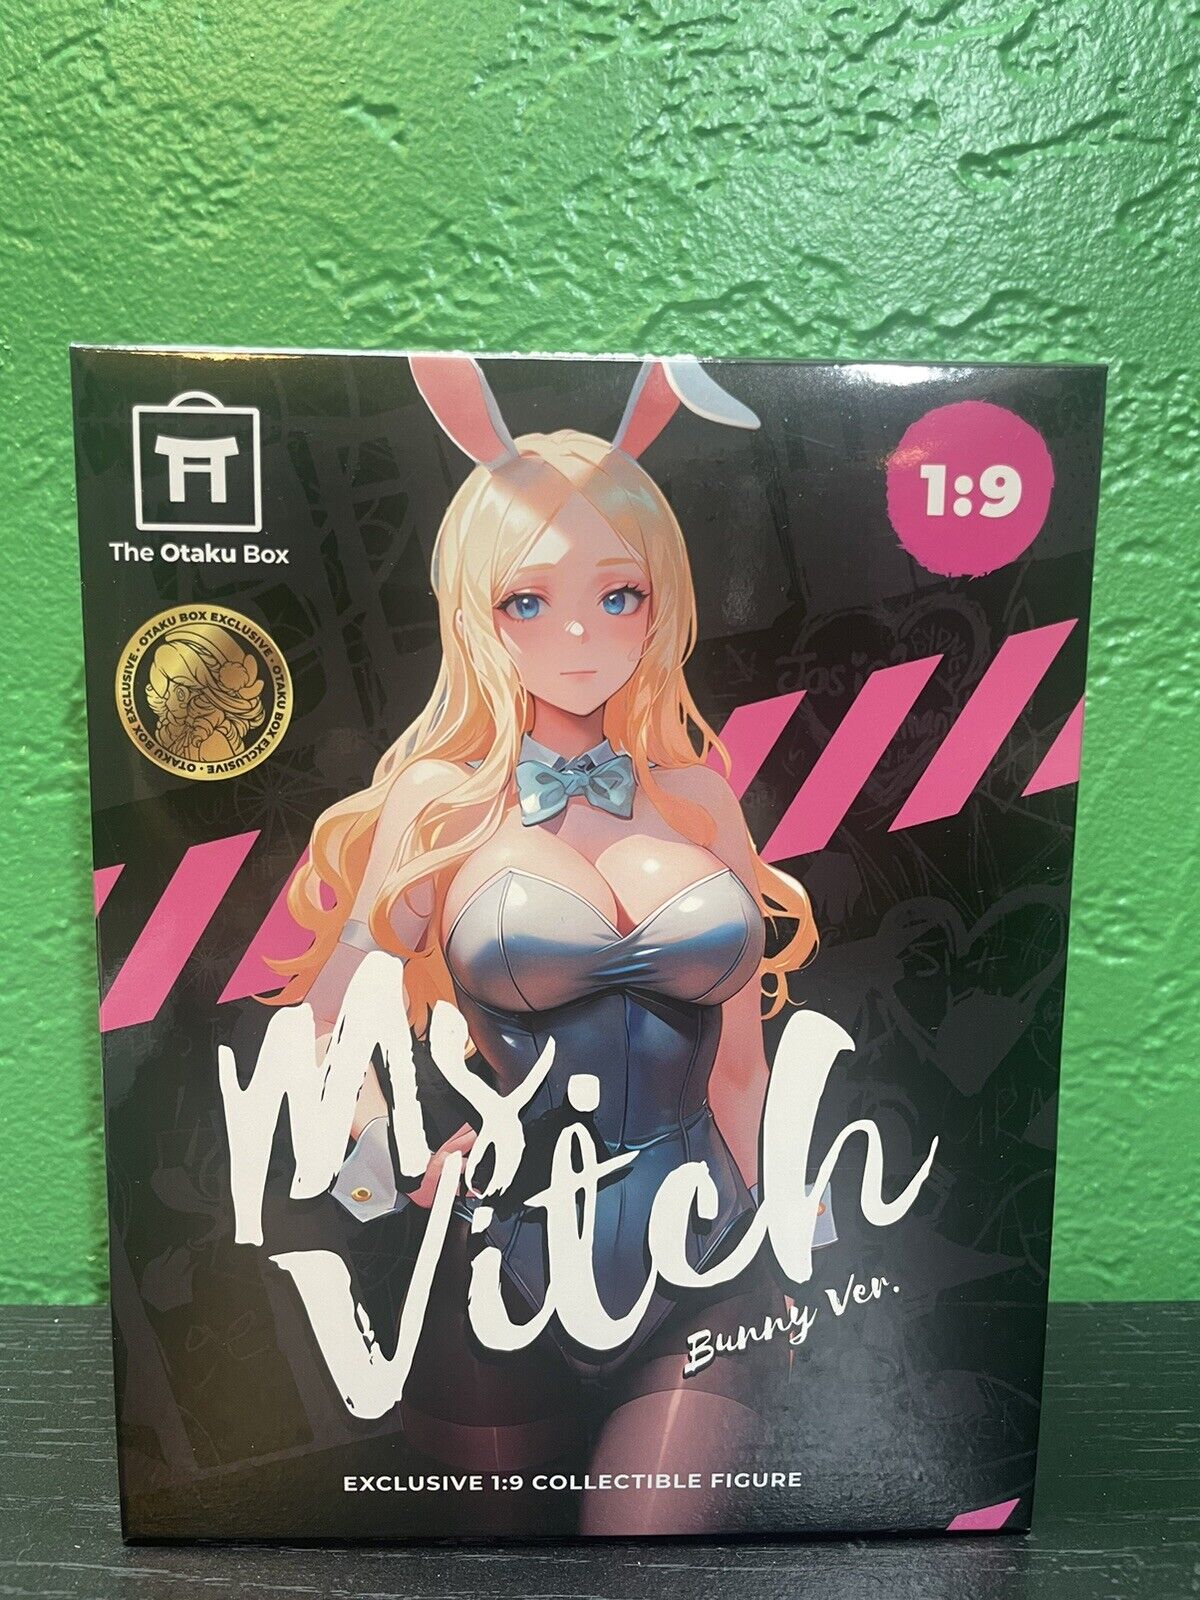 The Otaku Box Ms. Vitch Bunny Ver. Figure